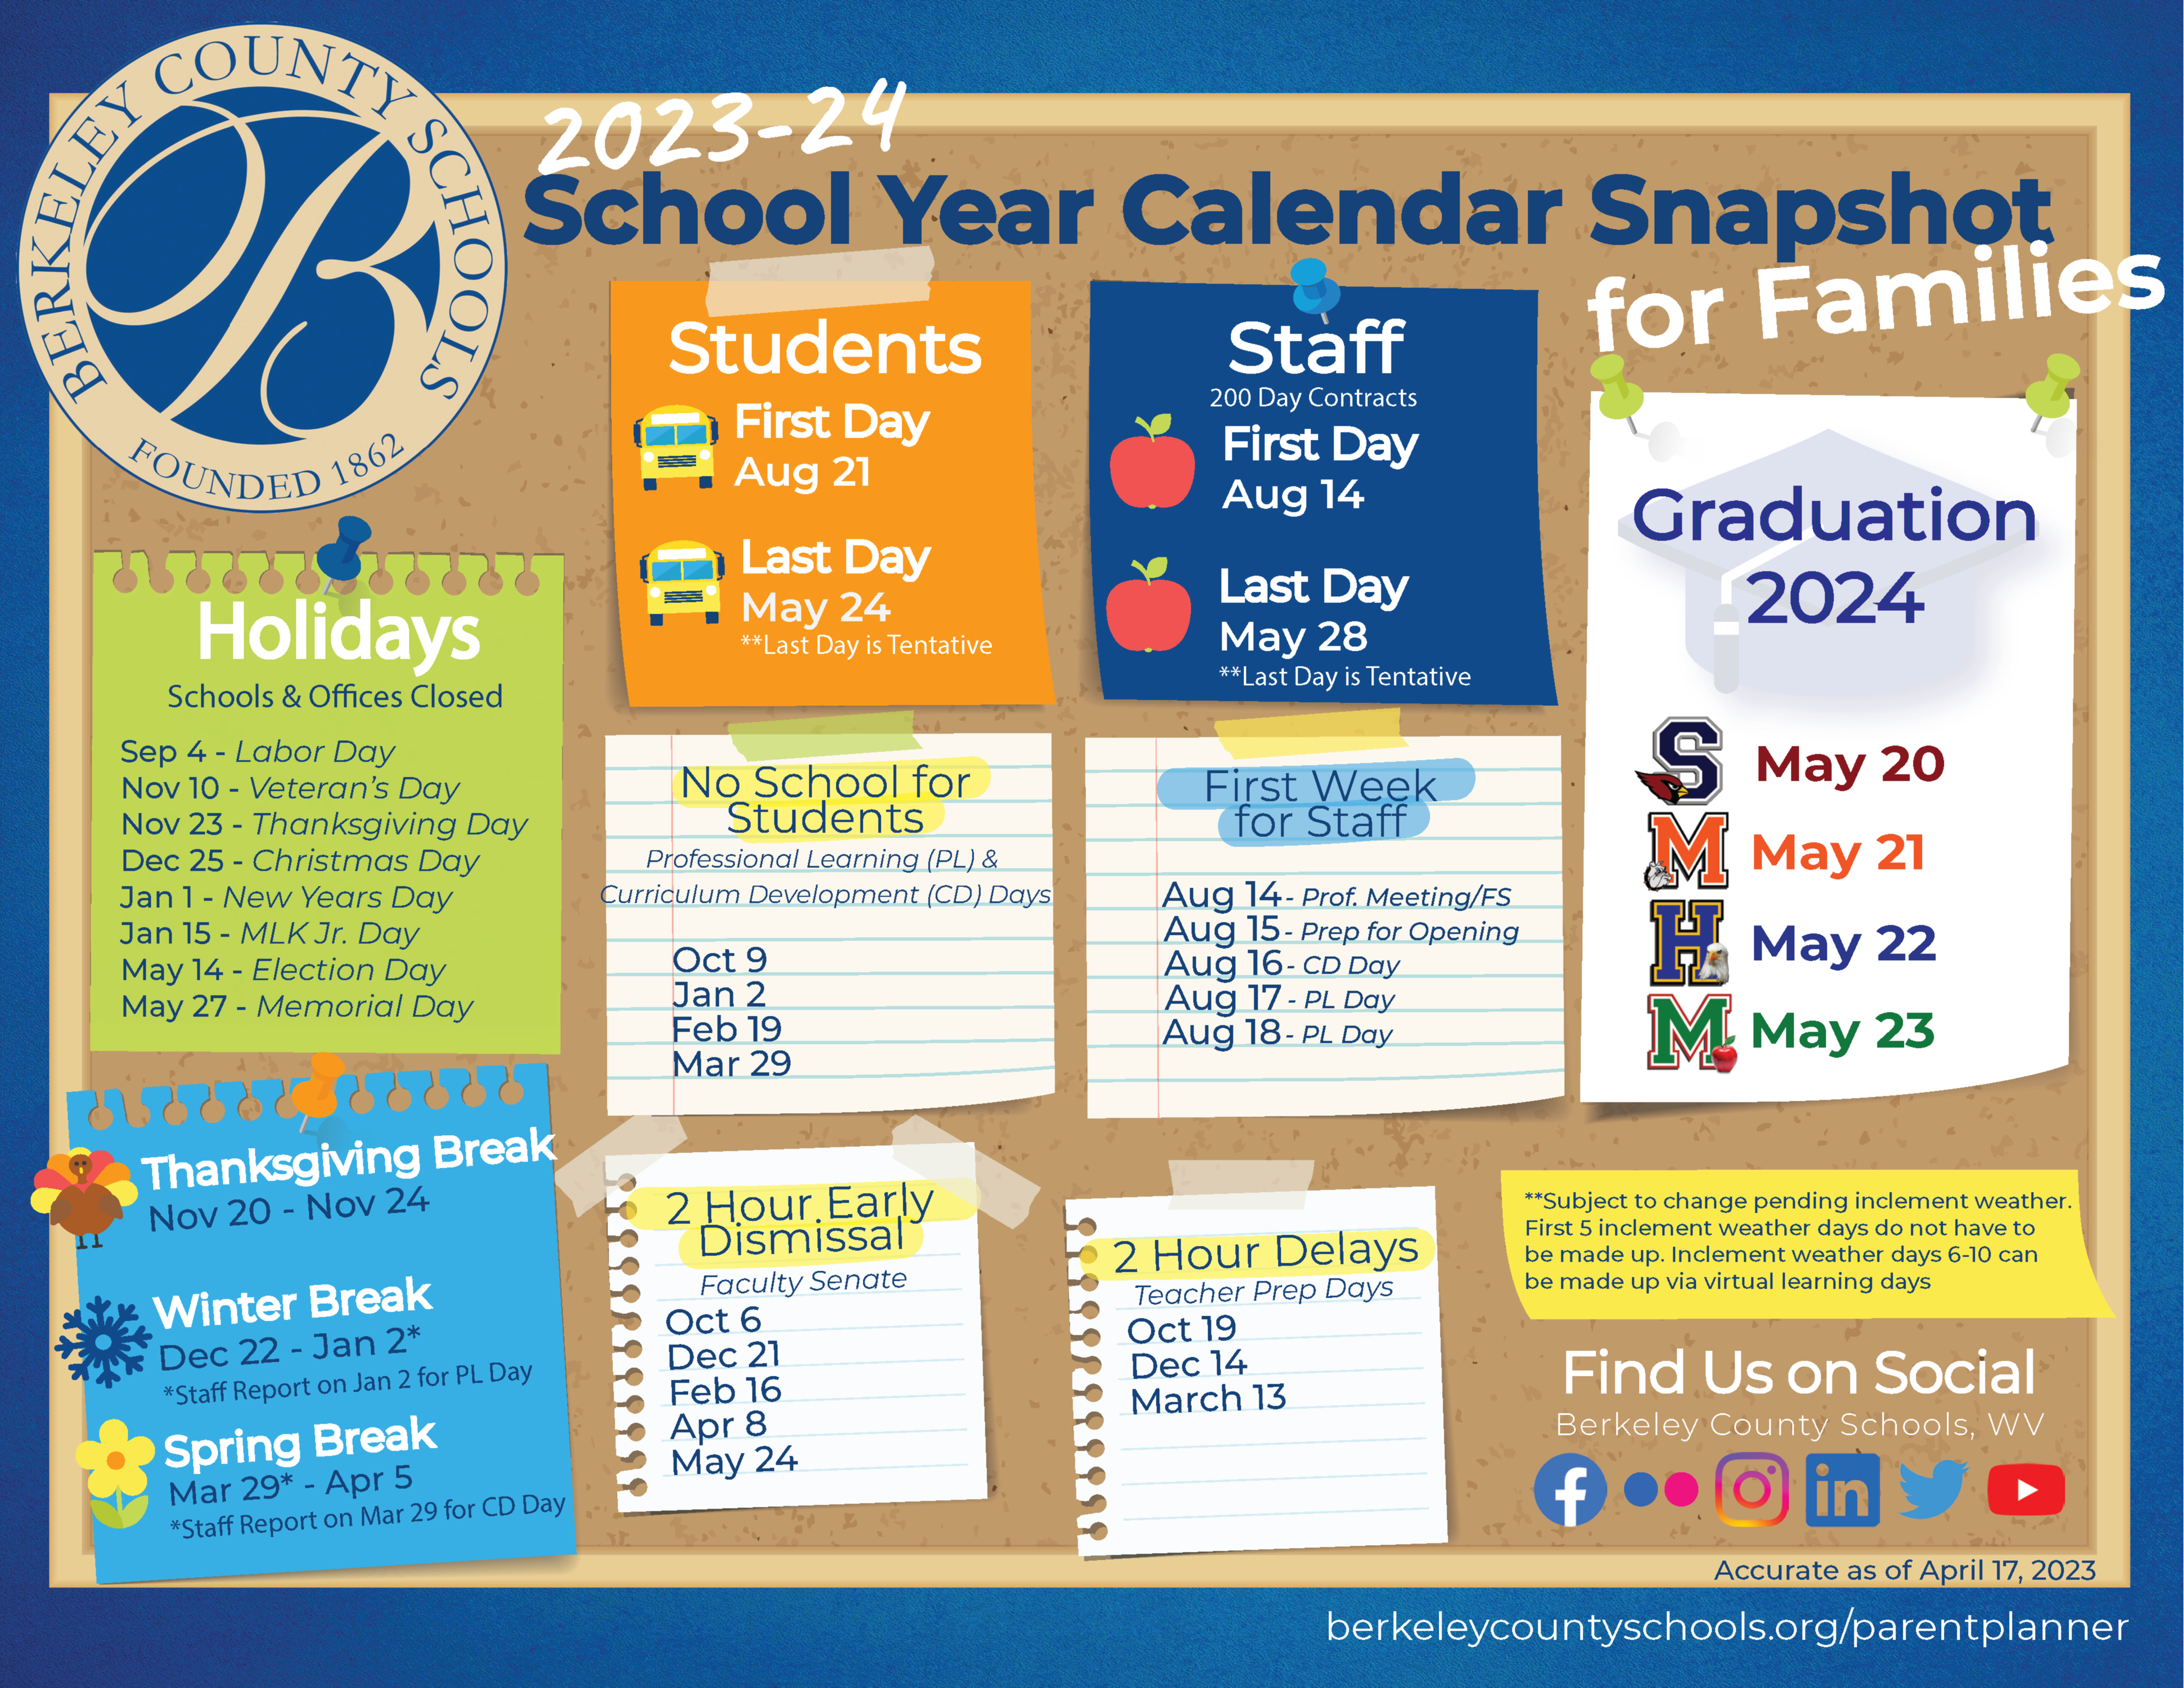 2023-24 School Year Calendar Snapshot: Link to District Calendar https://www.berkeleycountyschools.org/events/?start_date=2023-08-01&end_date=2023-08-31